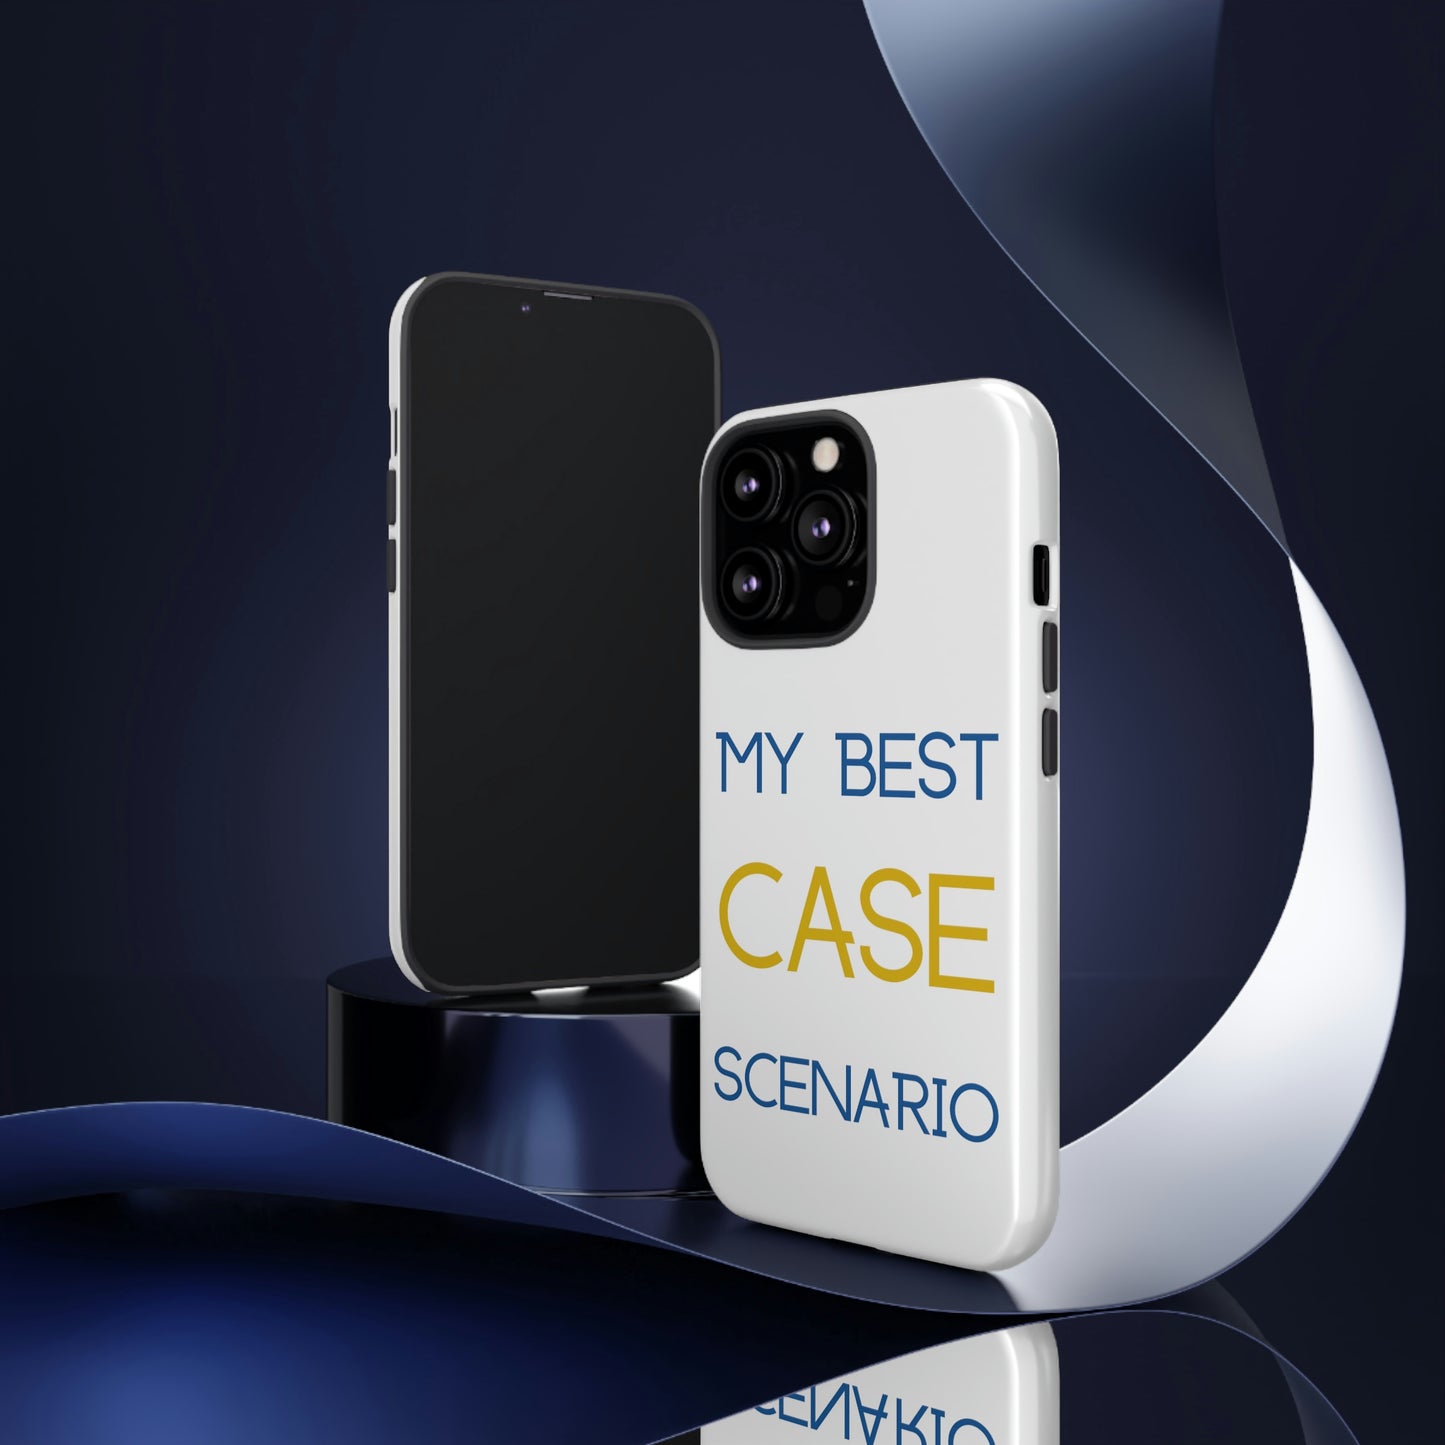 The Best Case Scenario